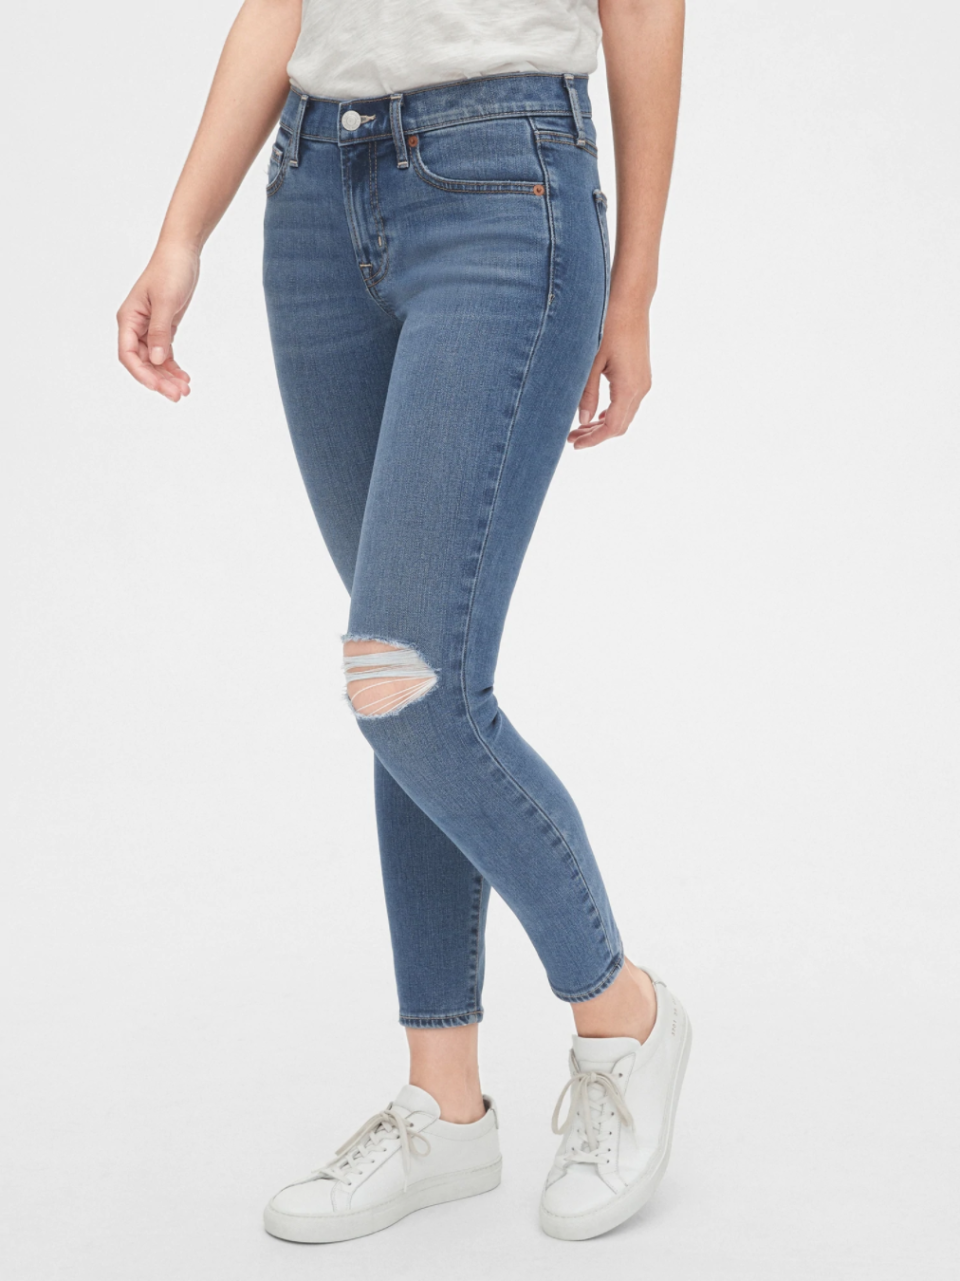 Soft Wear Mid Rise True Skinny Ankle Jeans. Image via Gap.